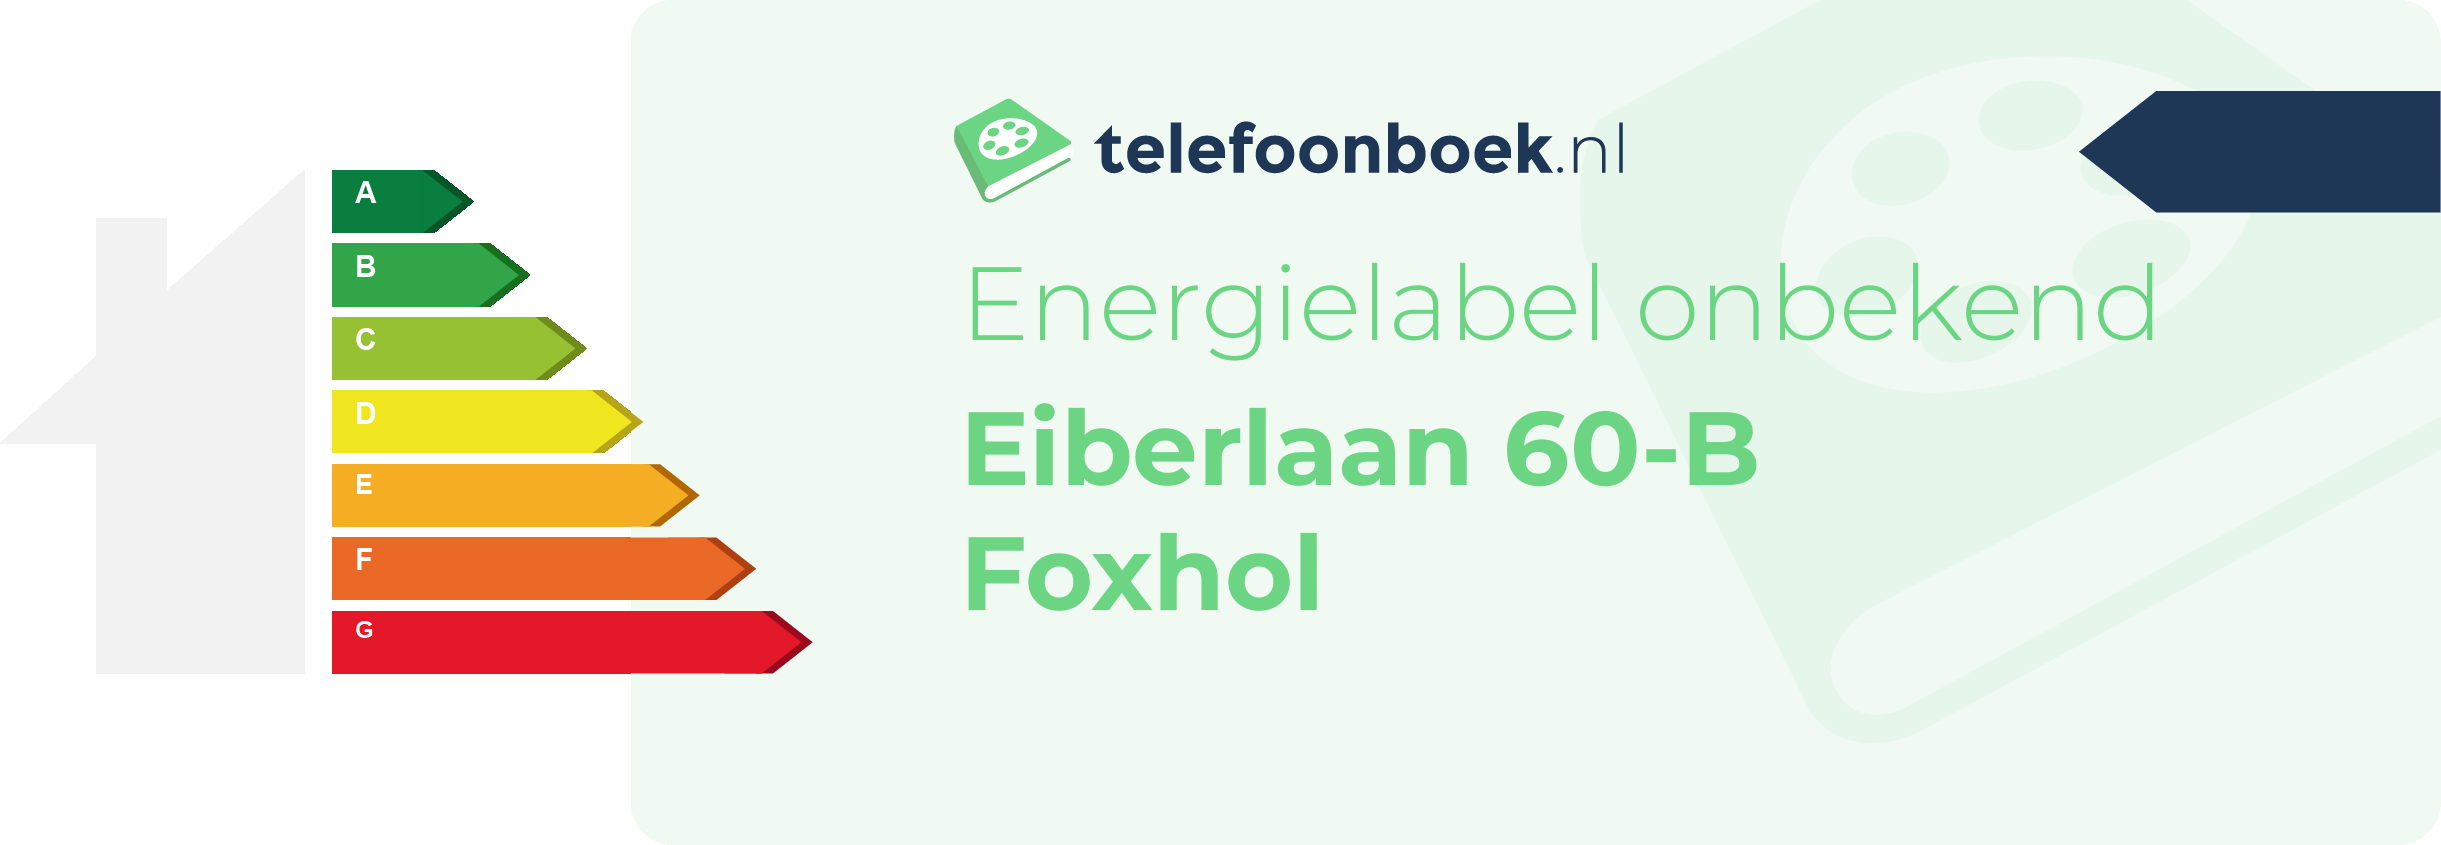 Energielabel Eiberlaan 60-B Foxhol